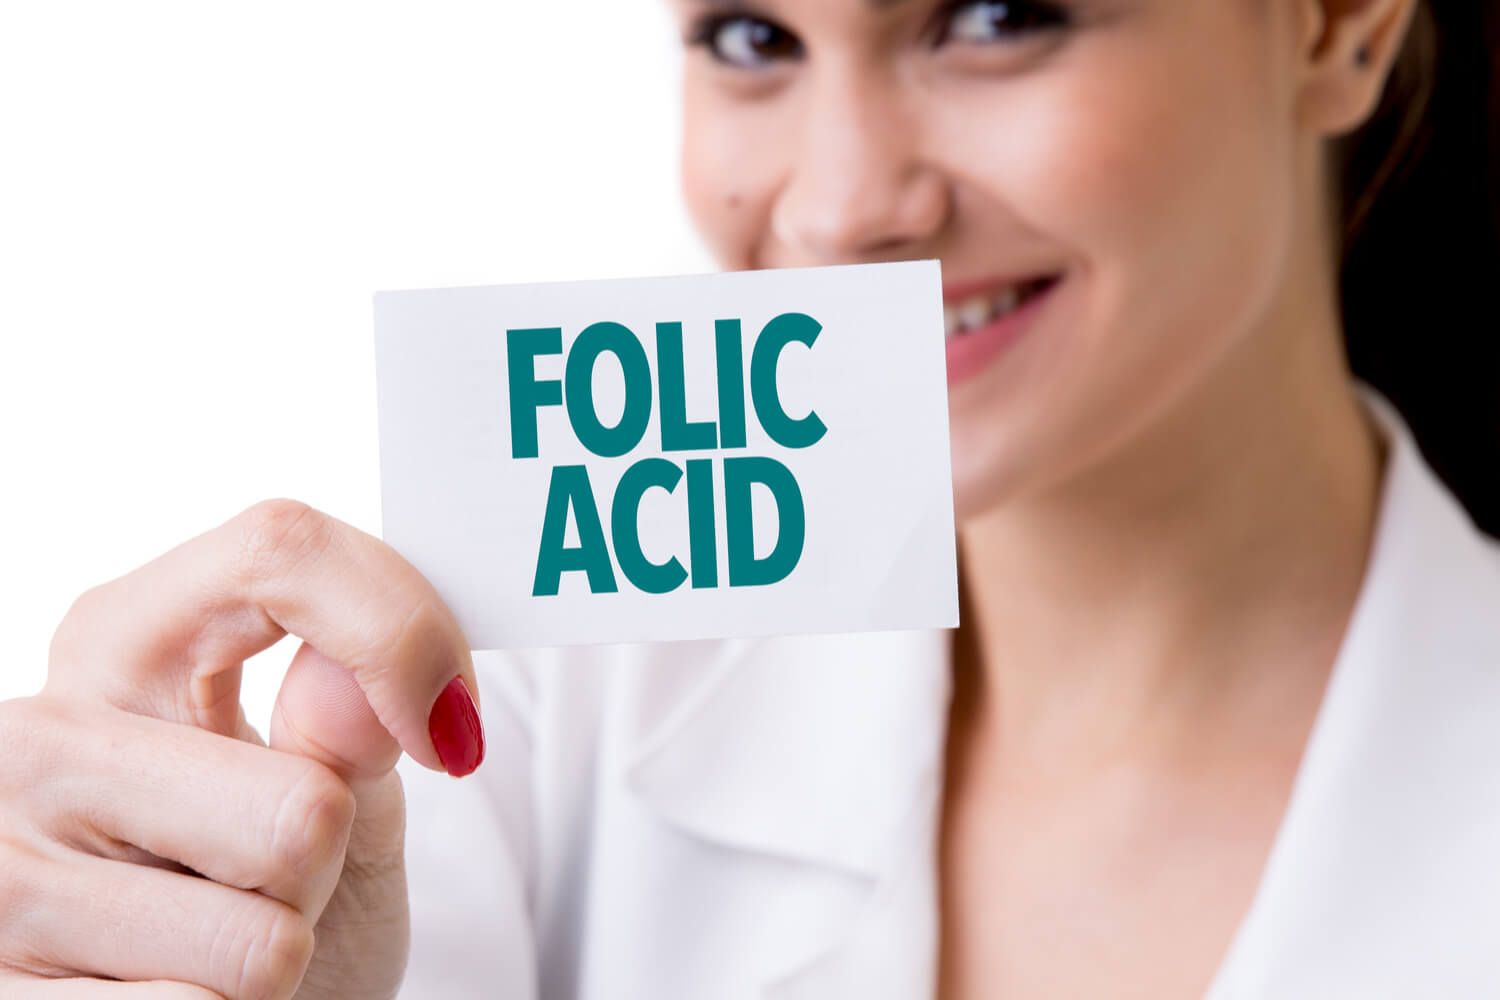 Folic Acid - Prevent Birth Defects In Baby